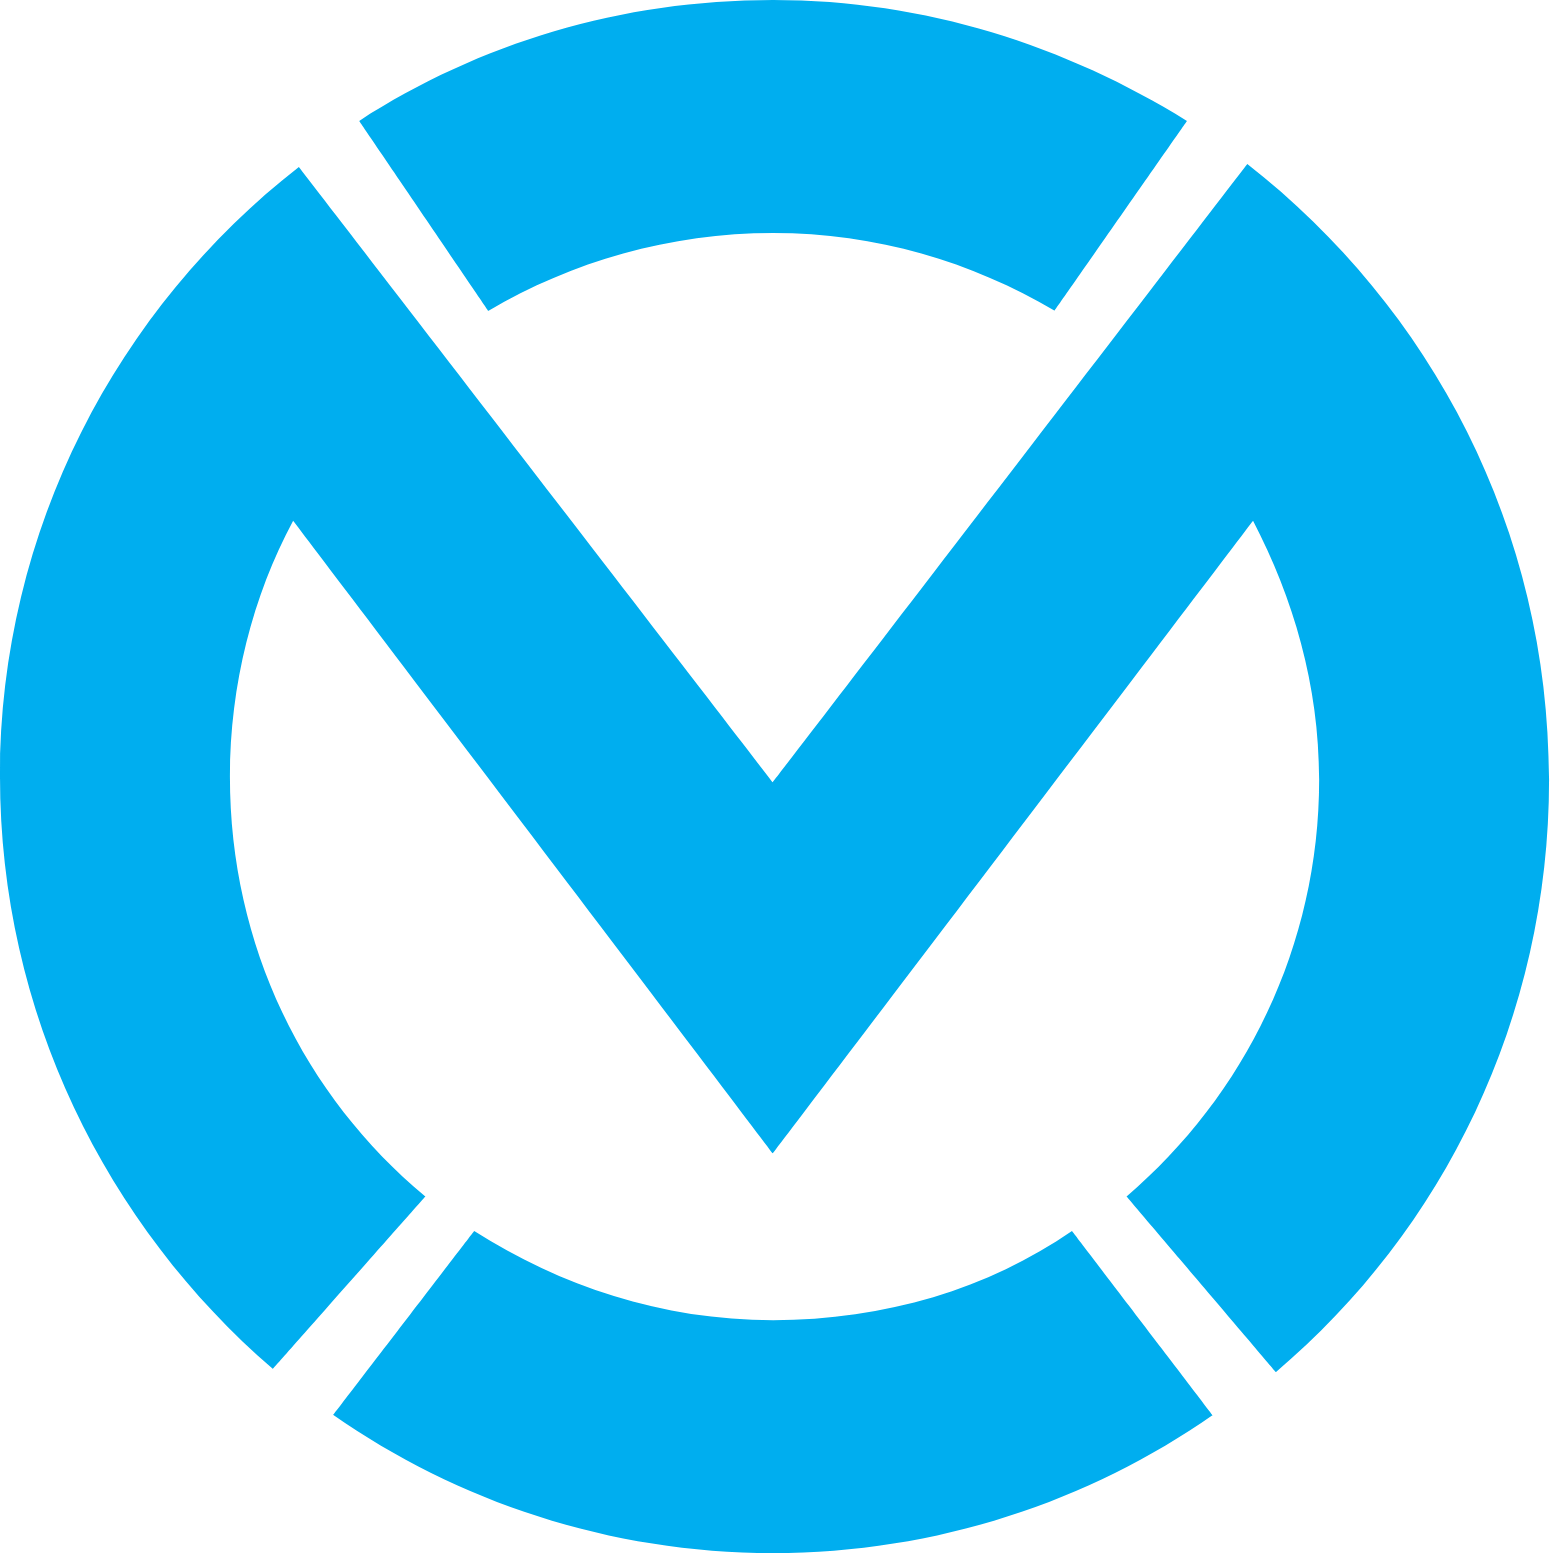 Munters Group AB logo (transparent PNG)